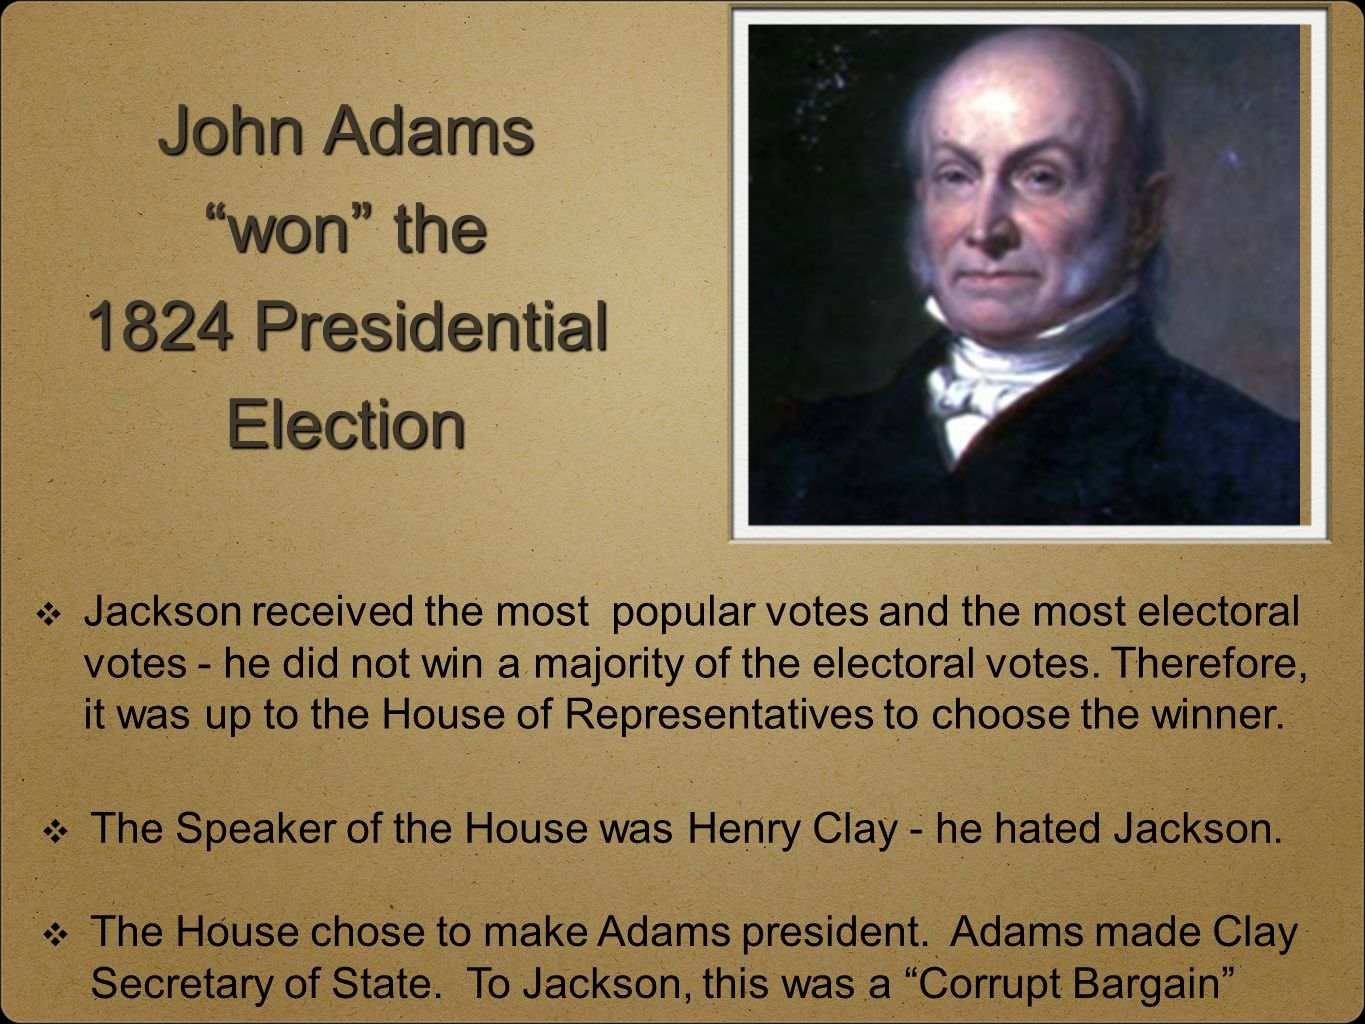 John Adams won the 1824 Presidential Election